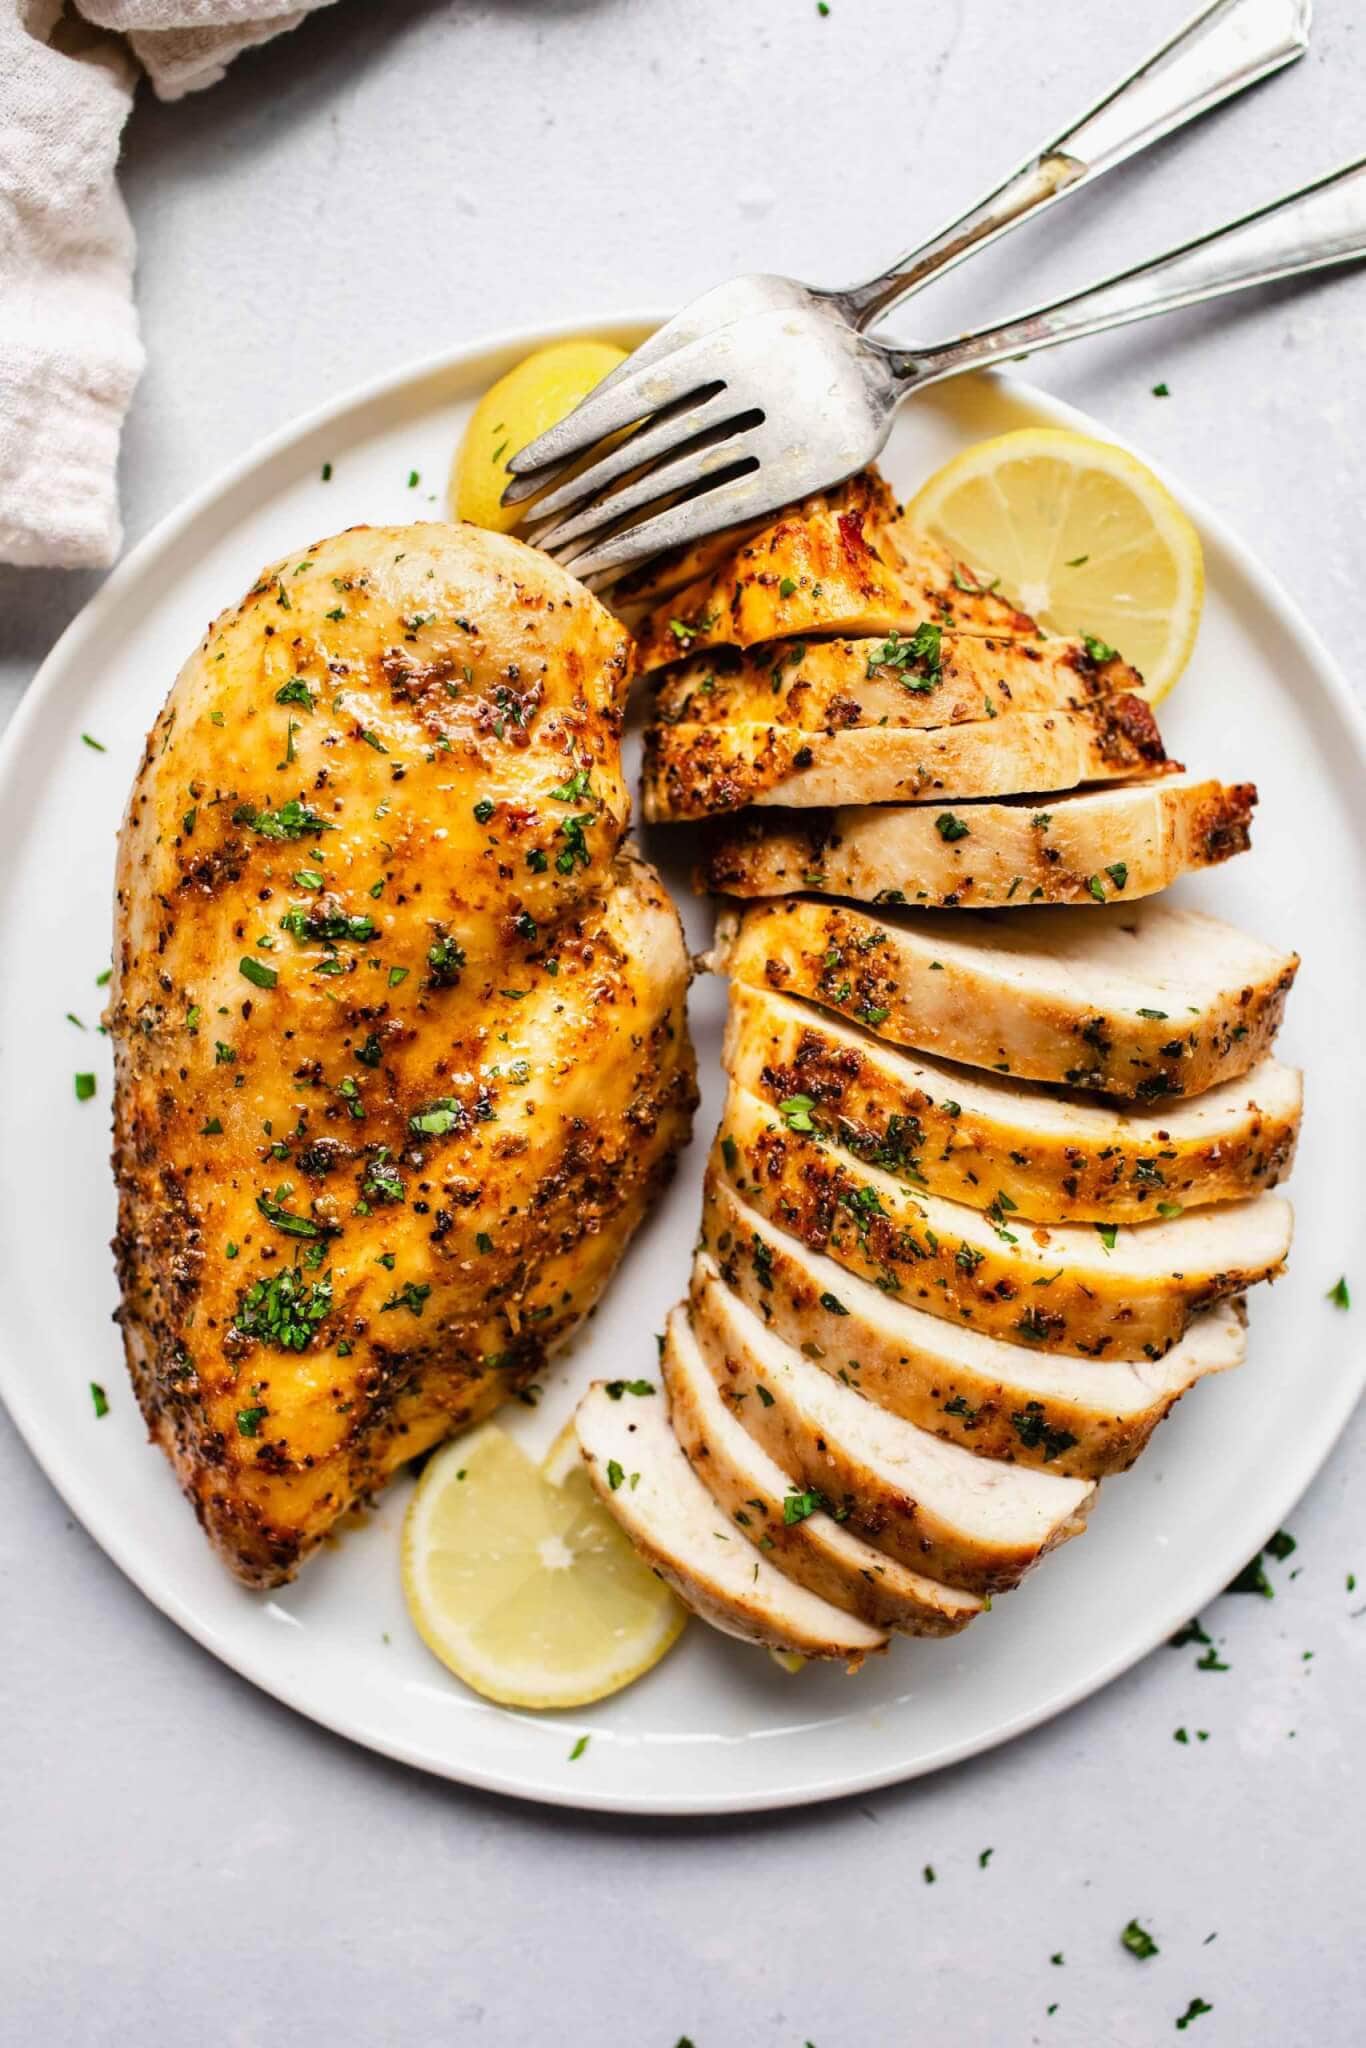 https://www.platingsandpairings.com/wp-content/uploads/2021/01/air-fryer-chicken-breasts-recipe-19-scaled.jpg